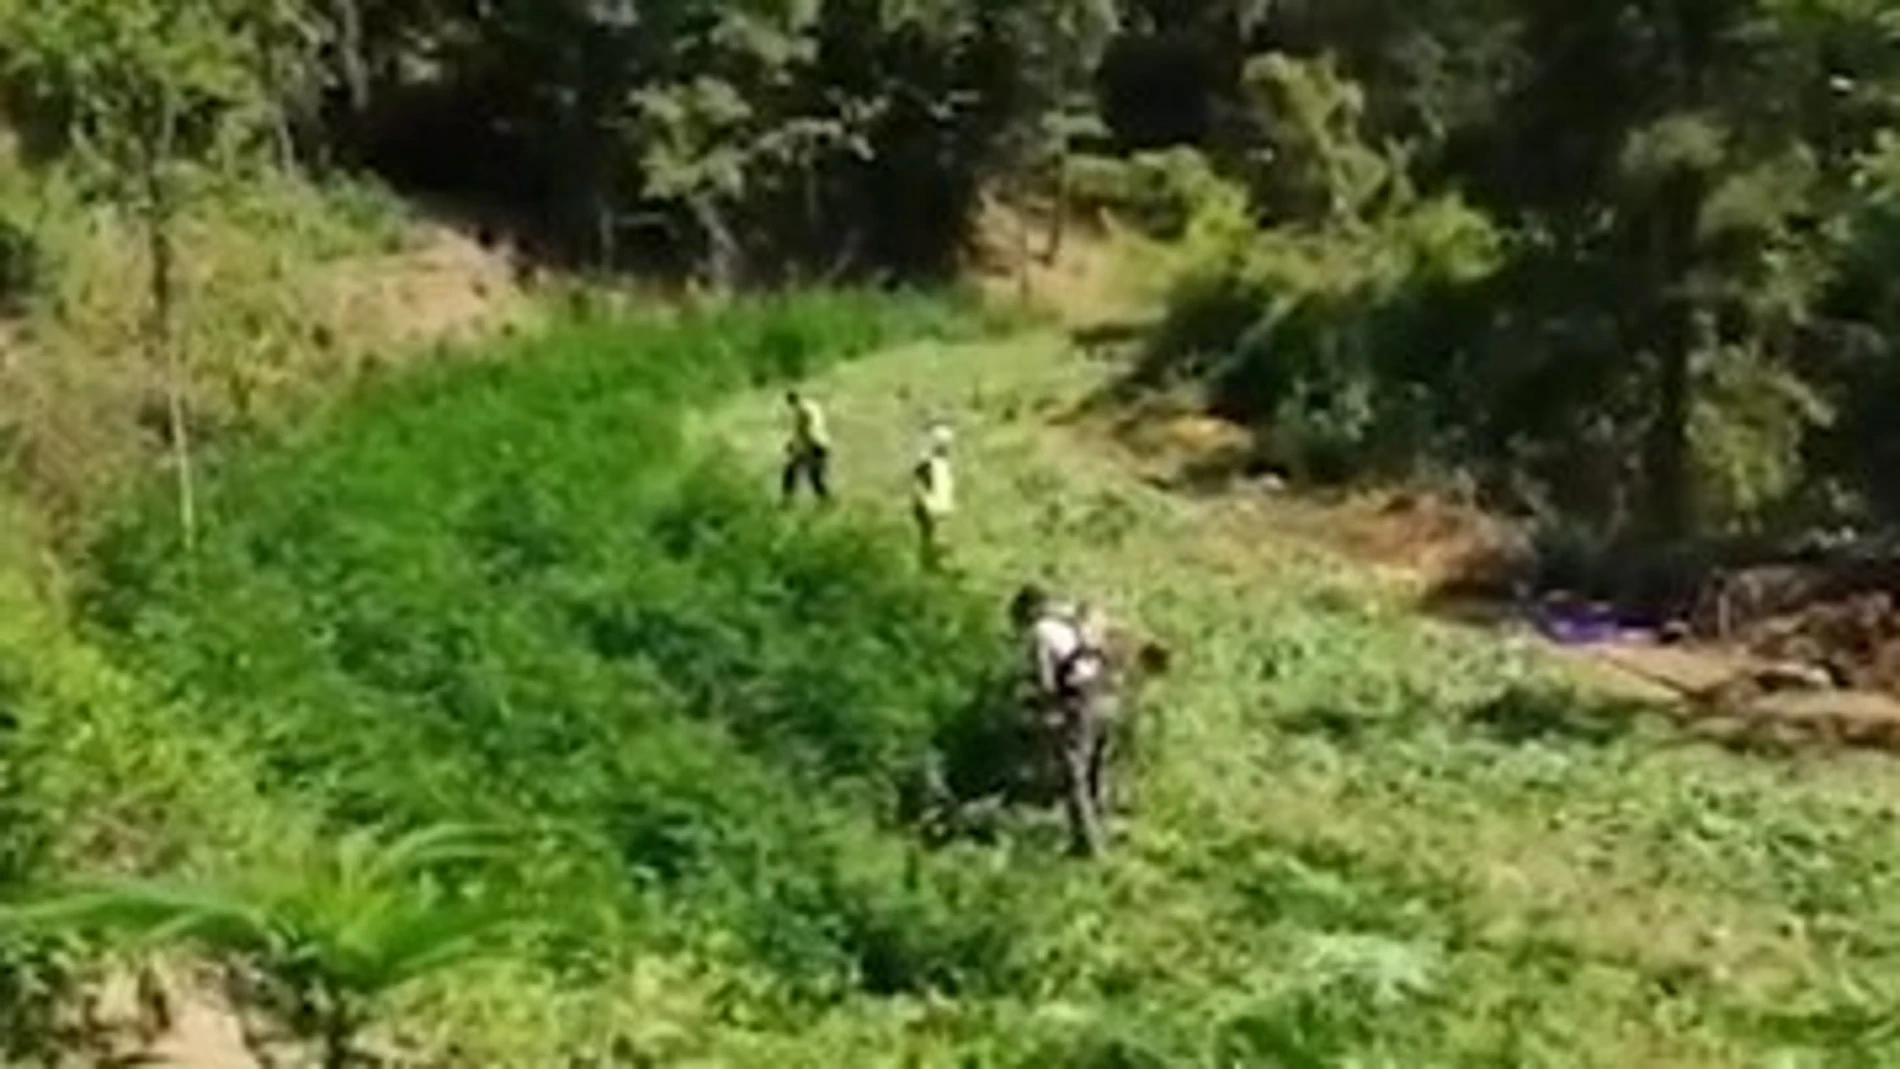 Plantación de marihuana incautada por los Mossos d'Esquadra